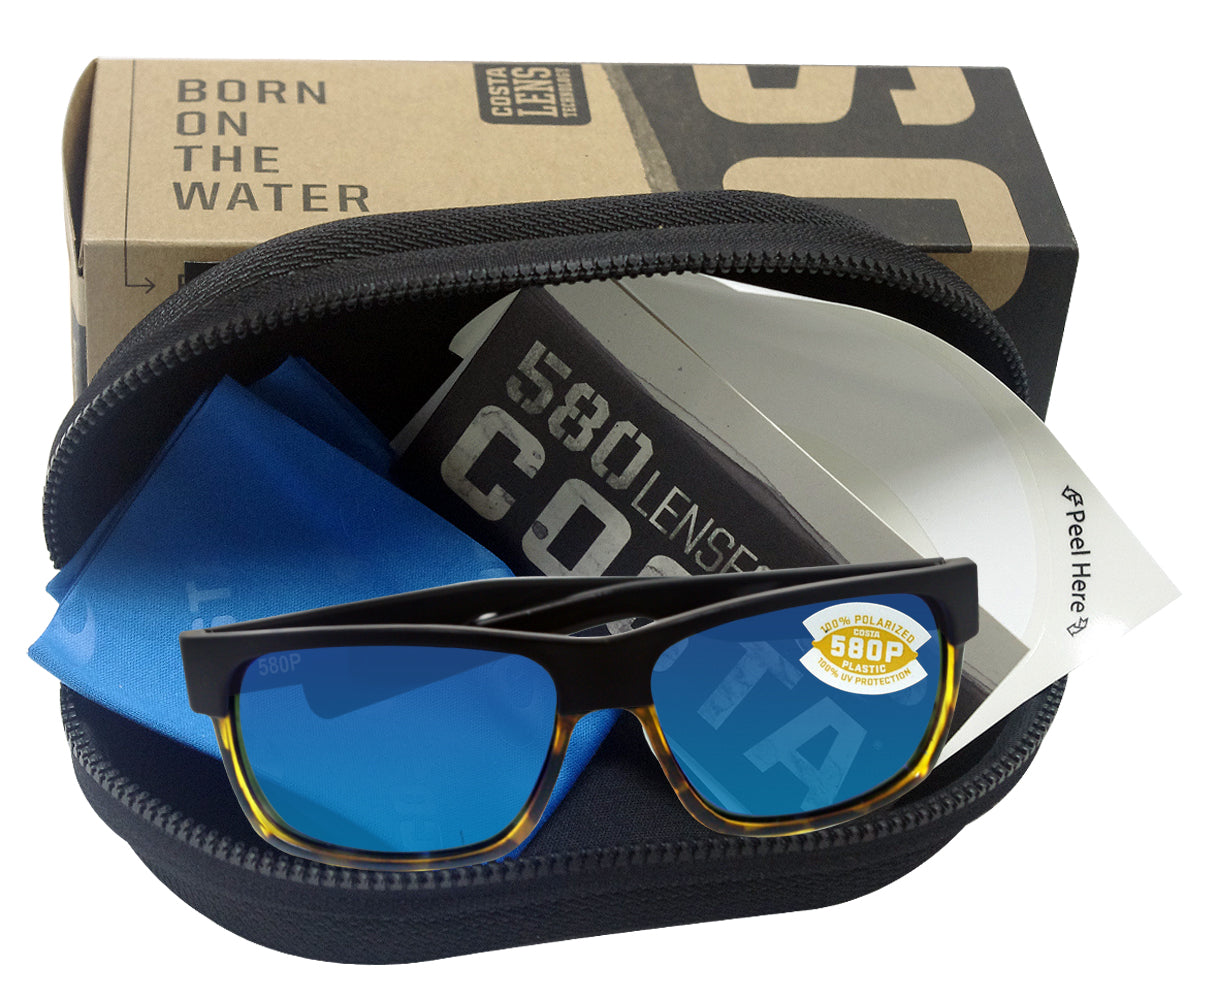 Costa Del Mar Half Moon Sunglasses - Shiny Black/Blue Mirror 580G